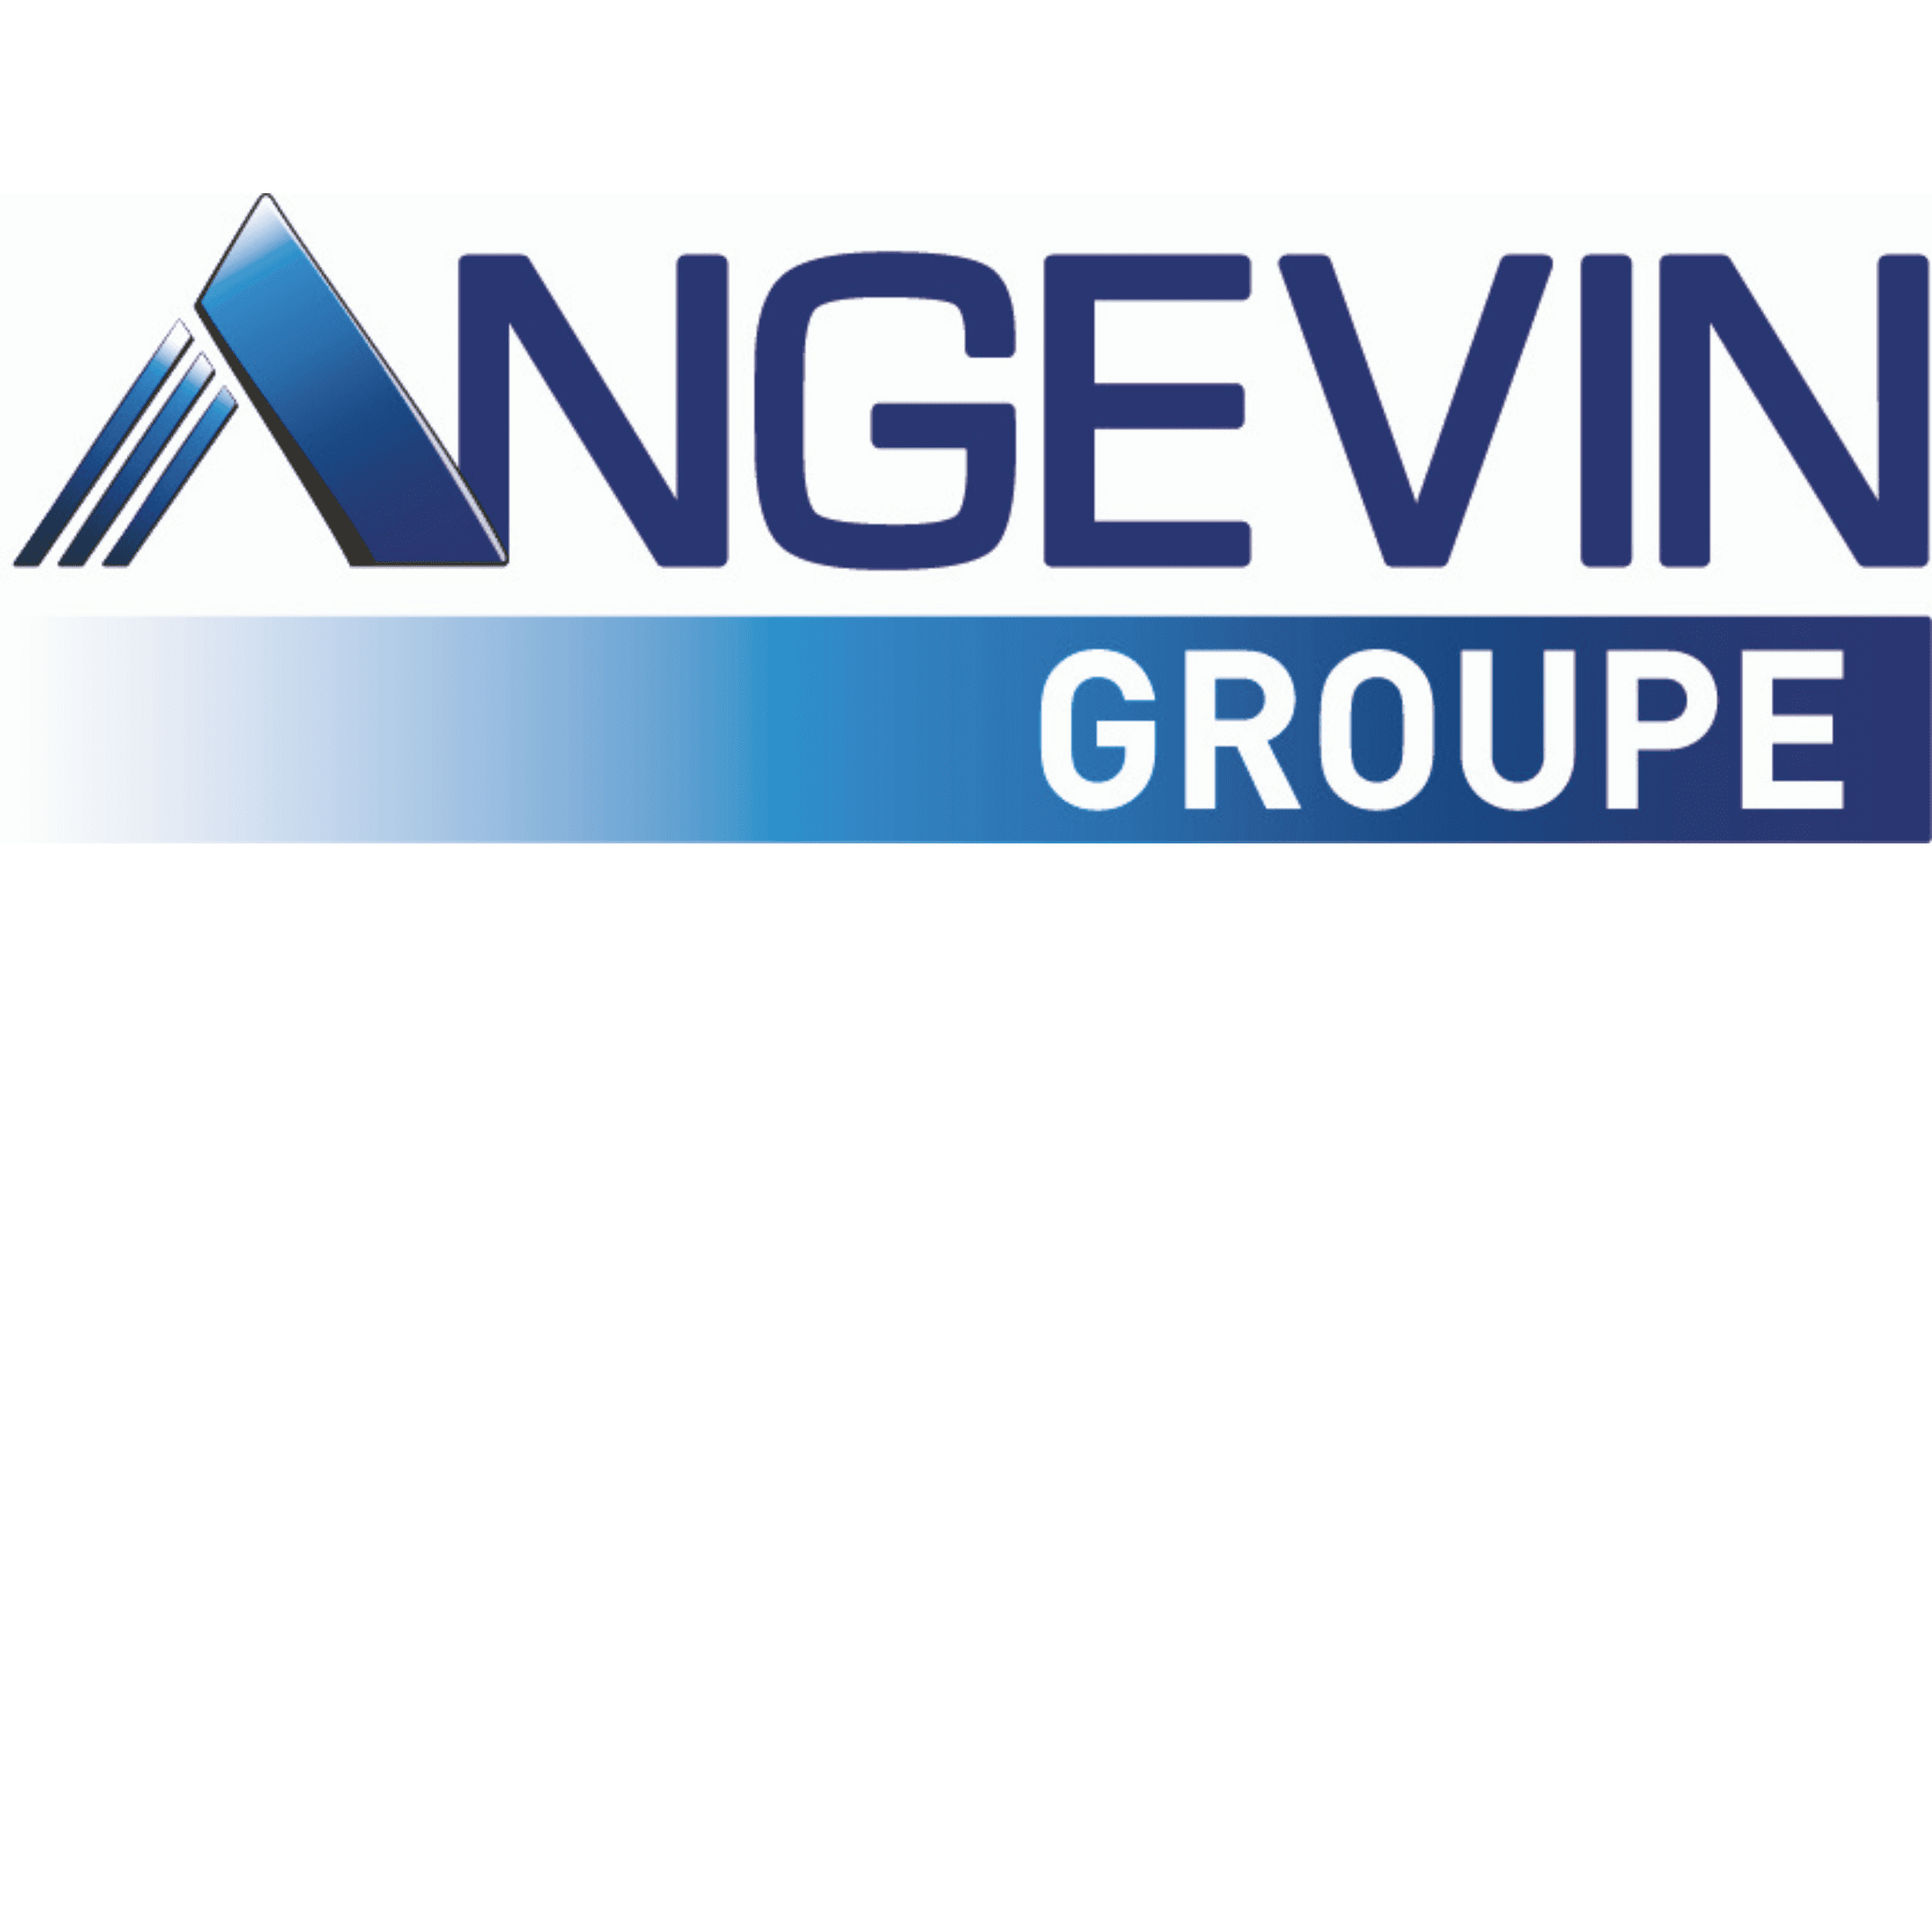 angevin groupe